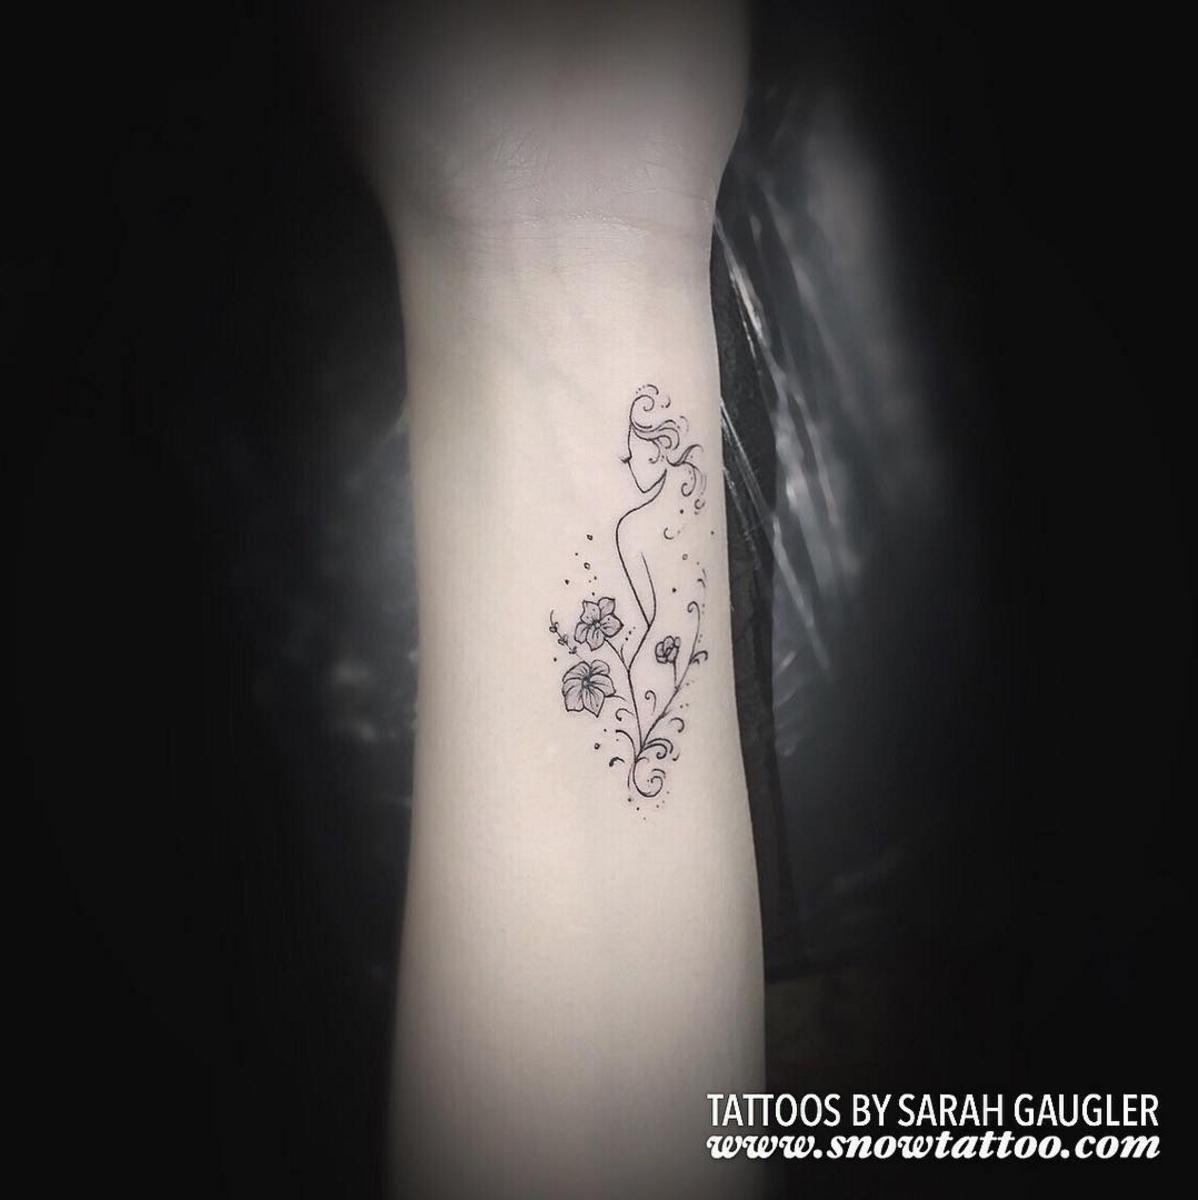 Sarah Gaugler Snow Tattoo Custom Feminine Silhouette Floral Fine Line Detailed Elegant FineLineTattoo New York Best Tattoos Best Tattoo Artist NYC.png